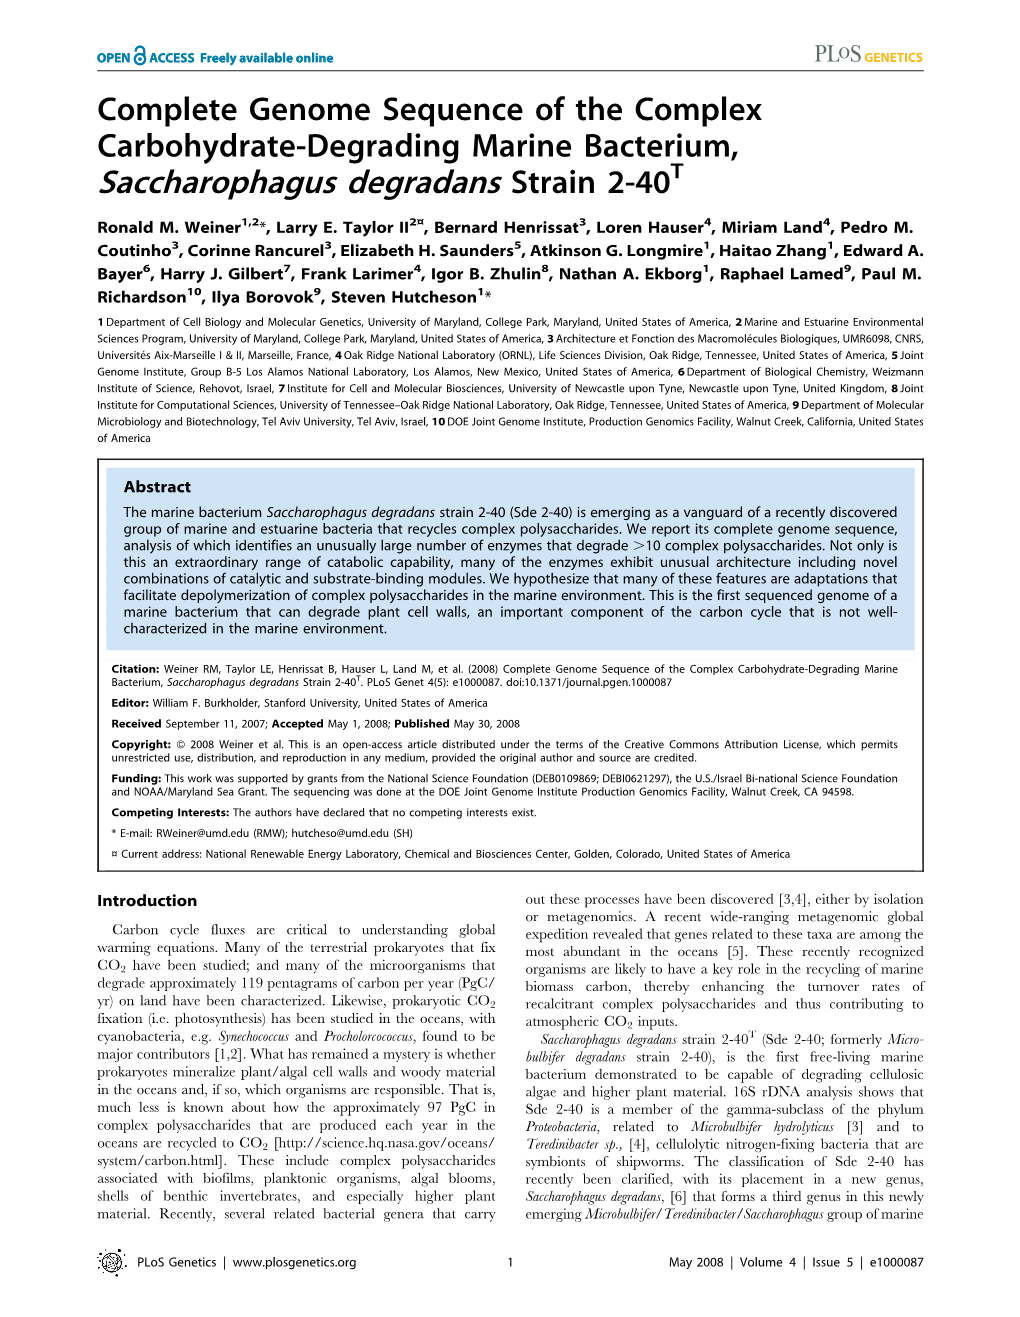 Saccharophagus Degradans Strain 2-40T